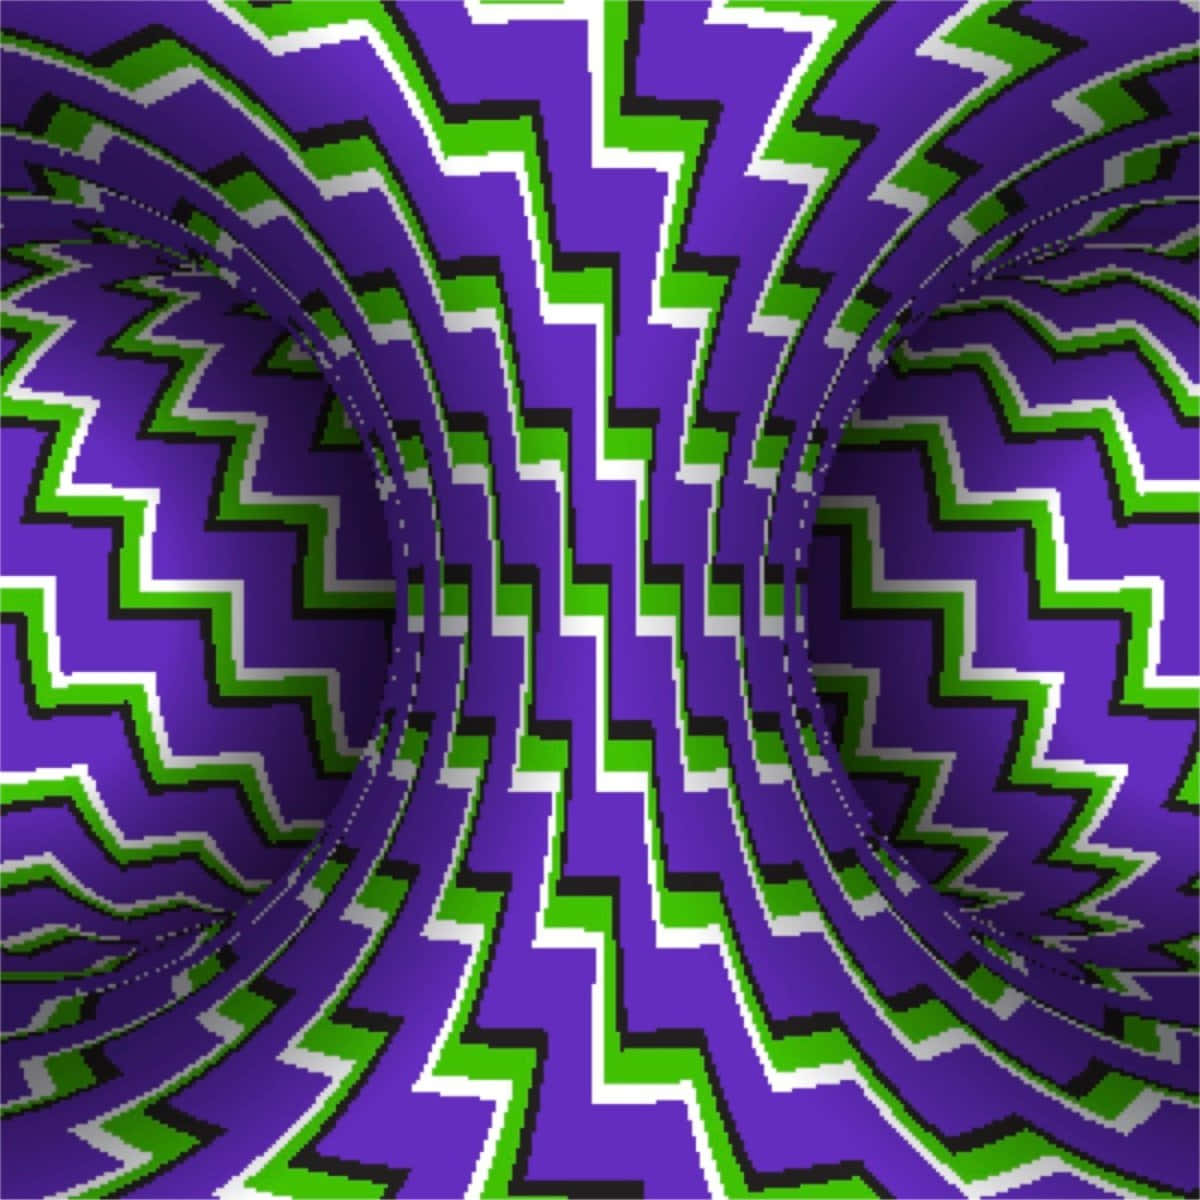 A Purple And Green Zig Zag Pattern